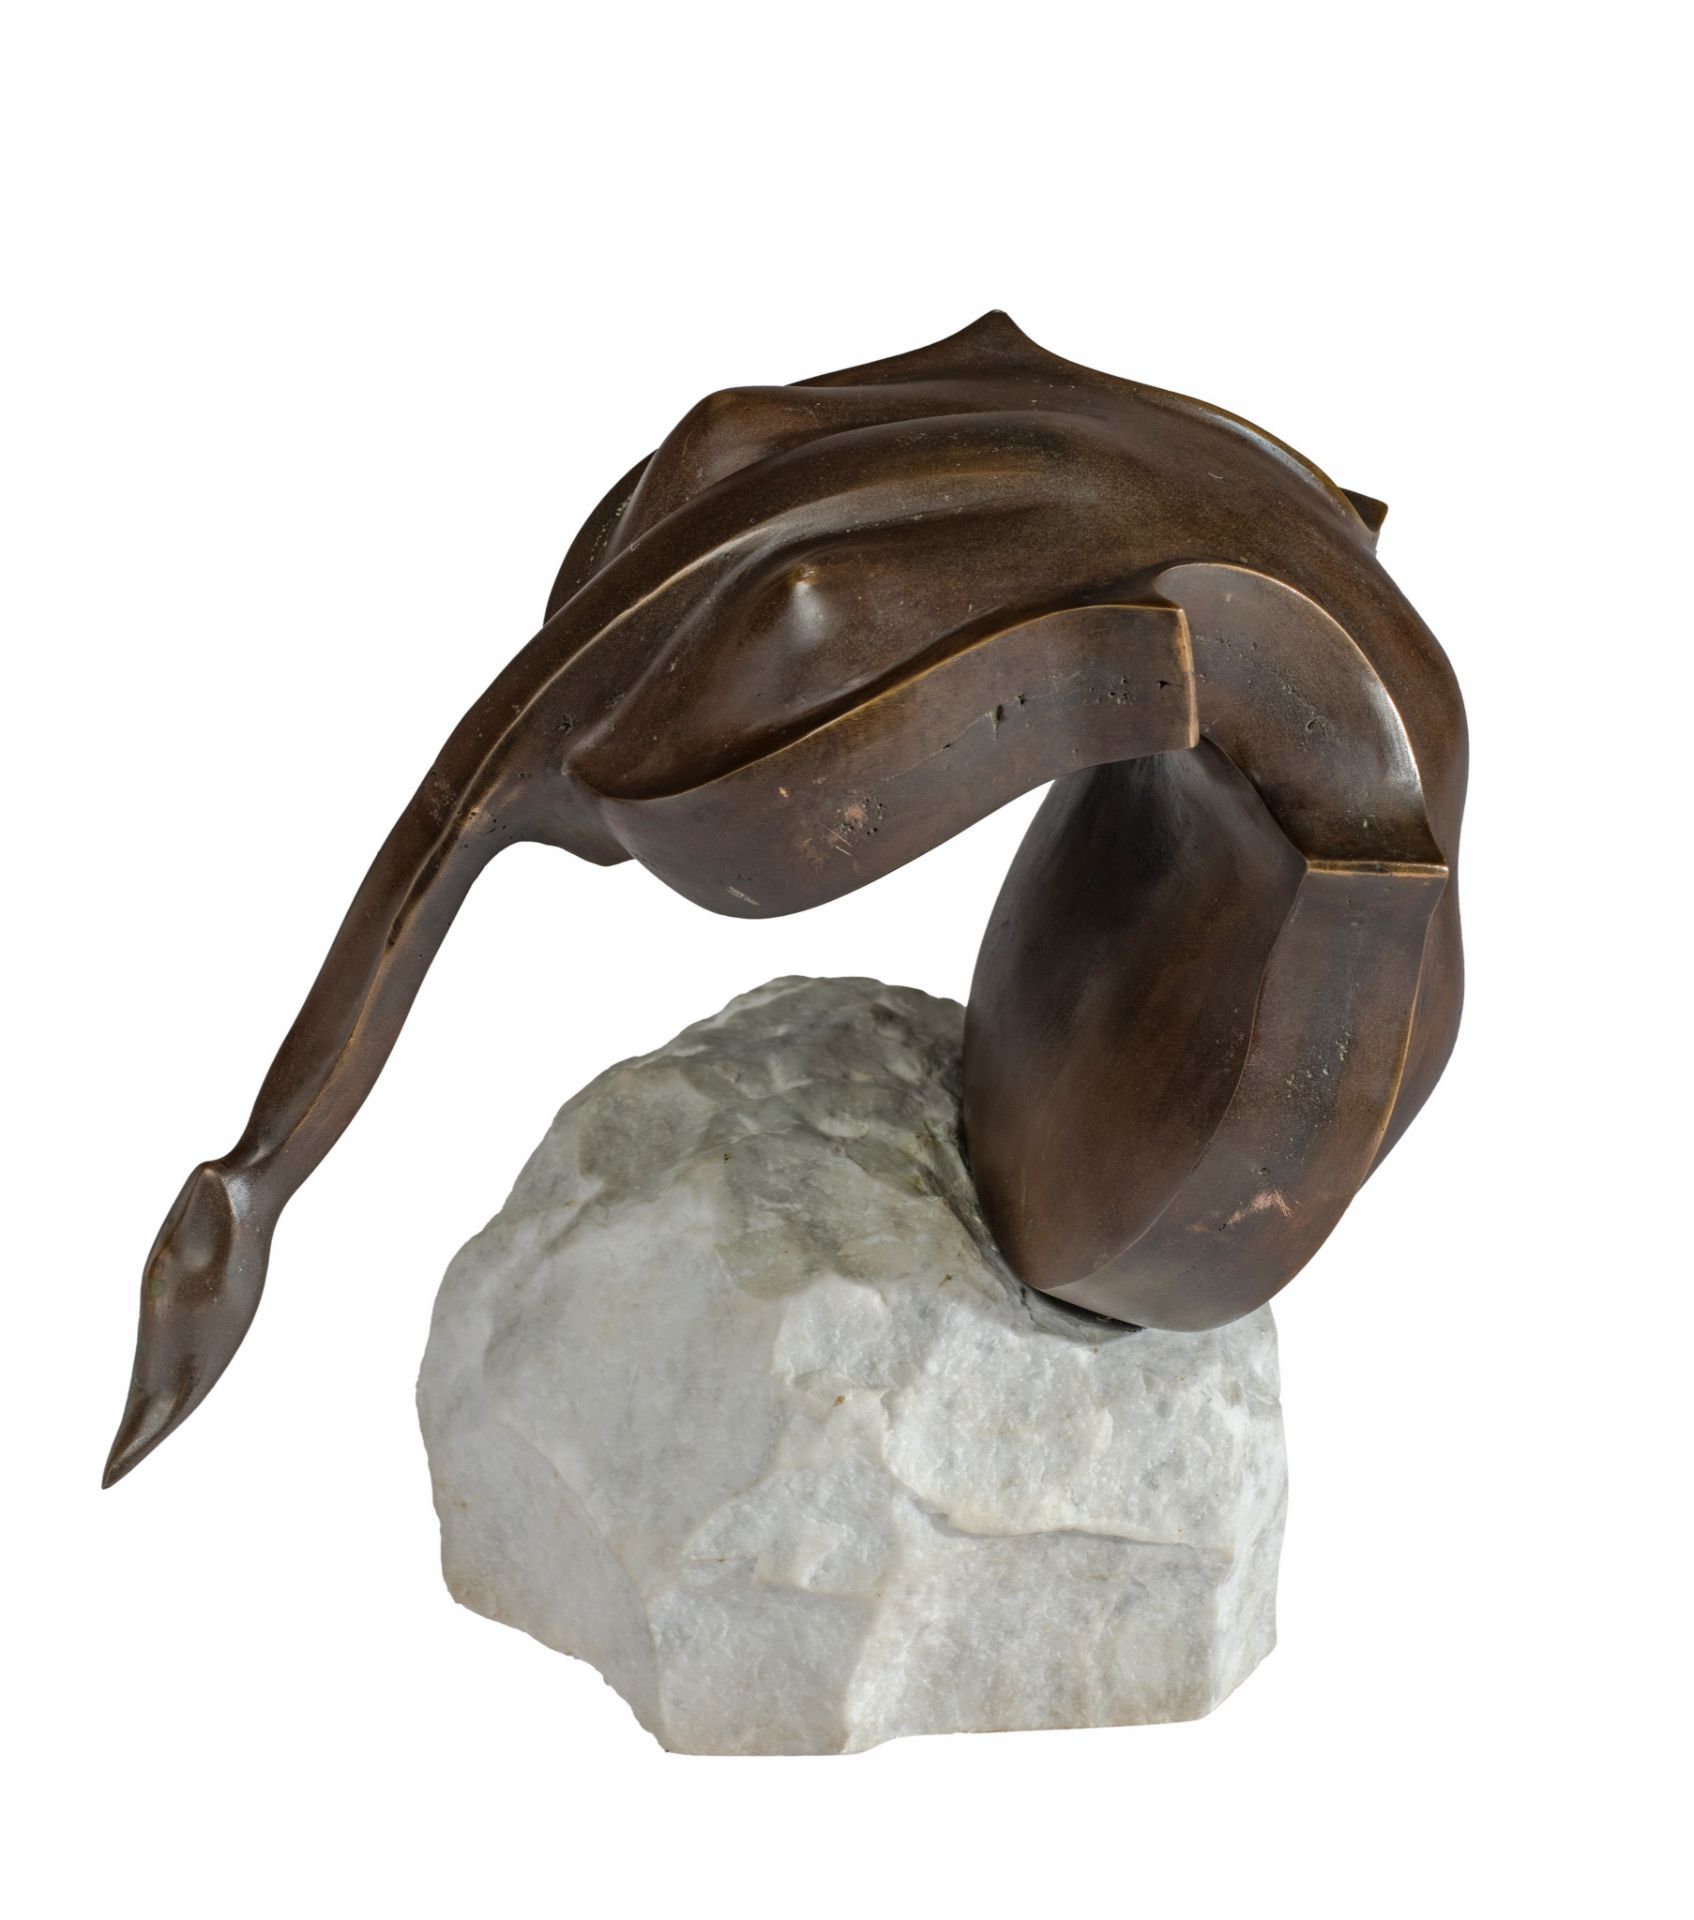 Deller, anthropomorphic violin, N∞ 4/6, patinated bronze on a Carrara marble rock, H 30 cm